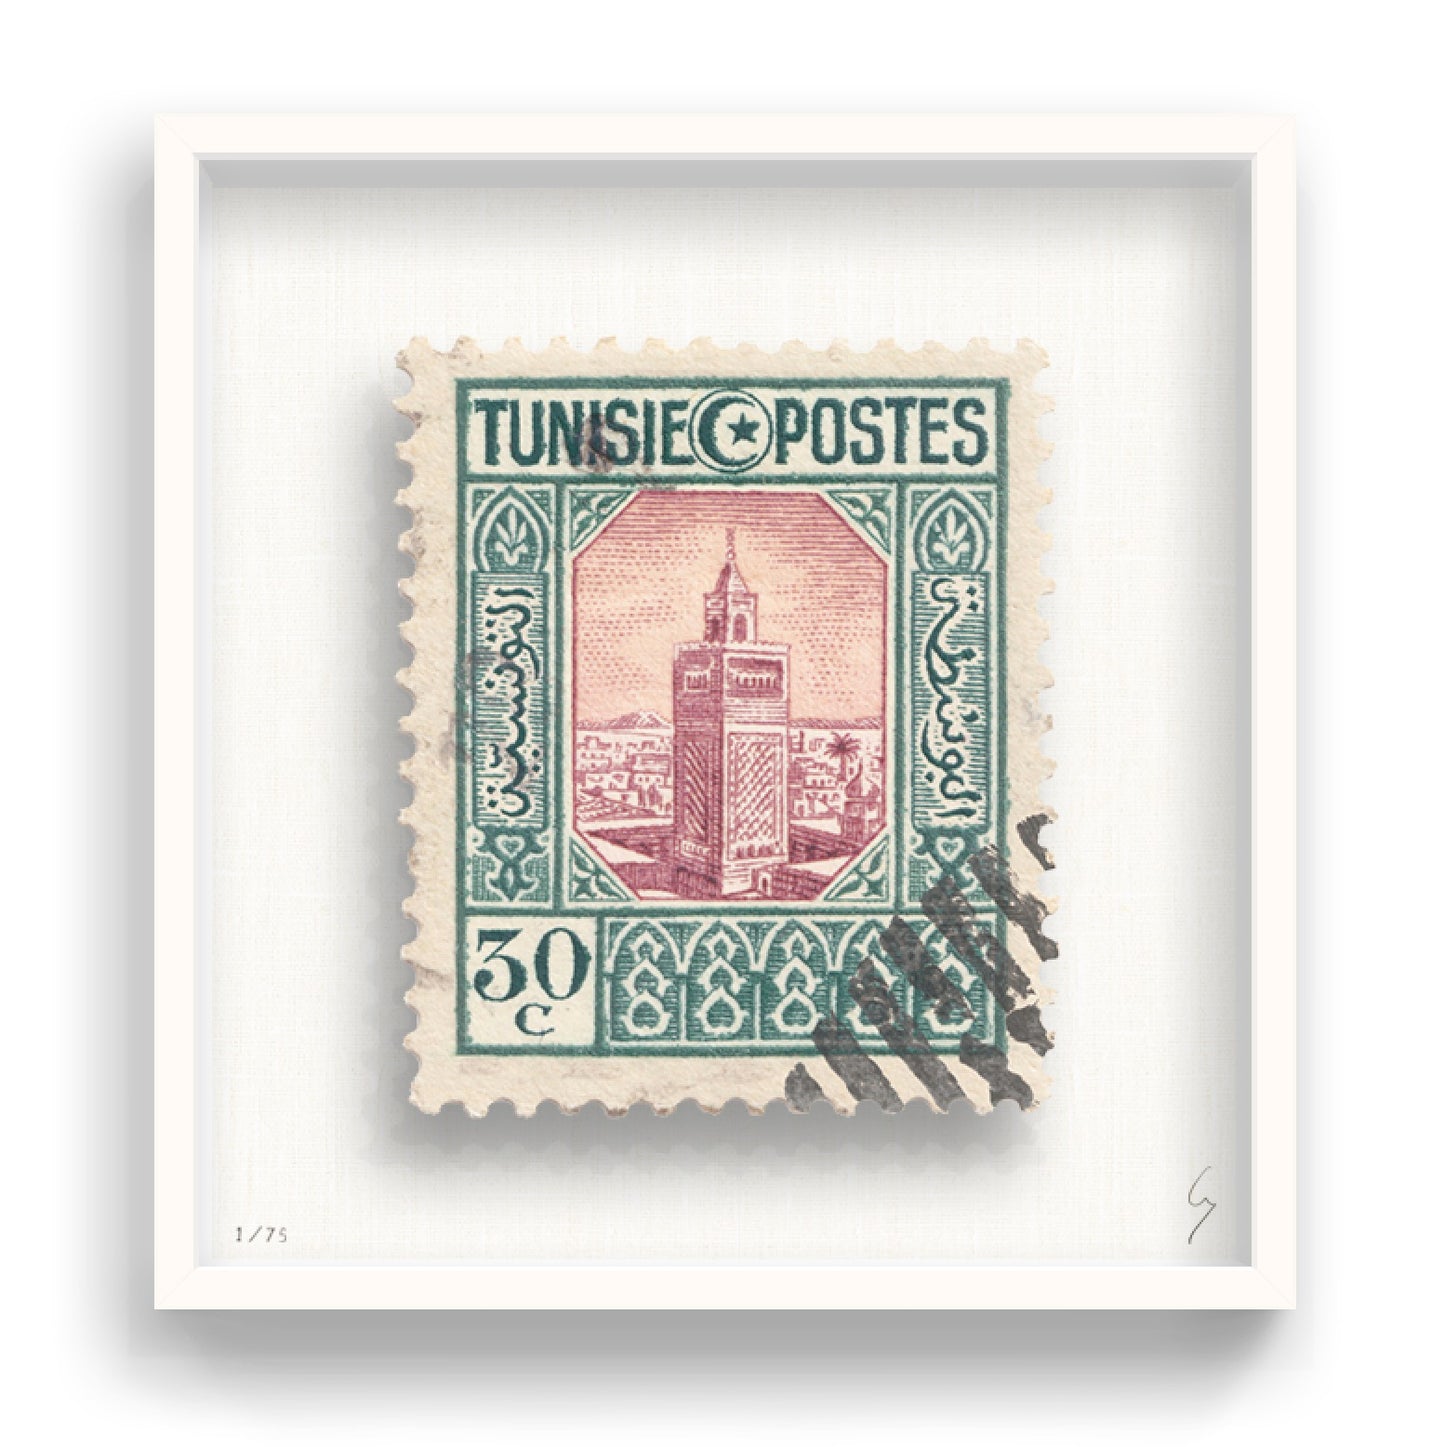 TUNISIA